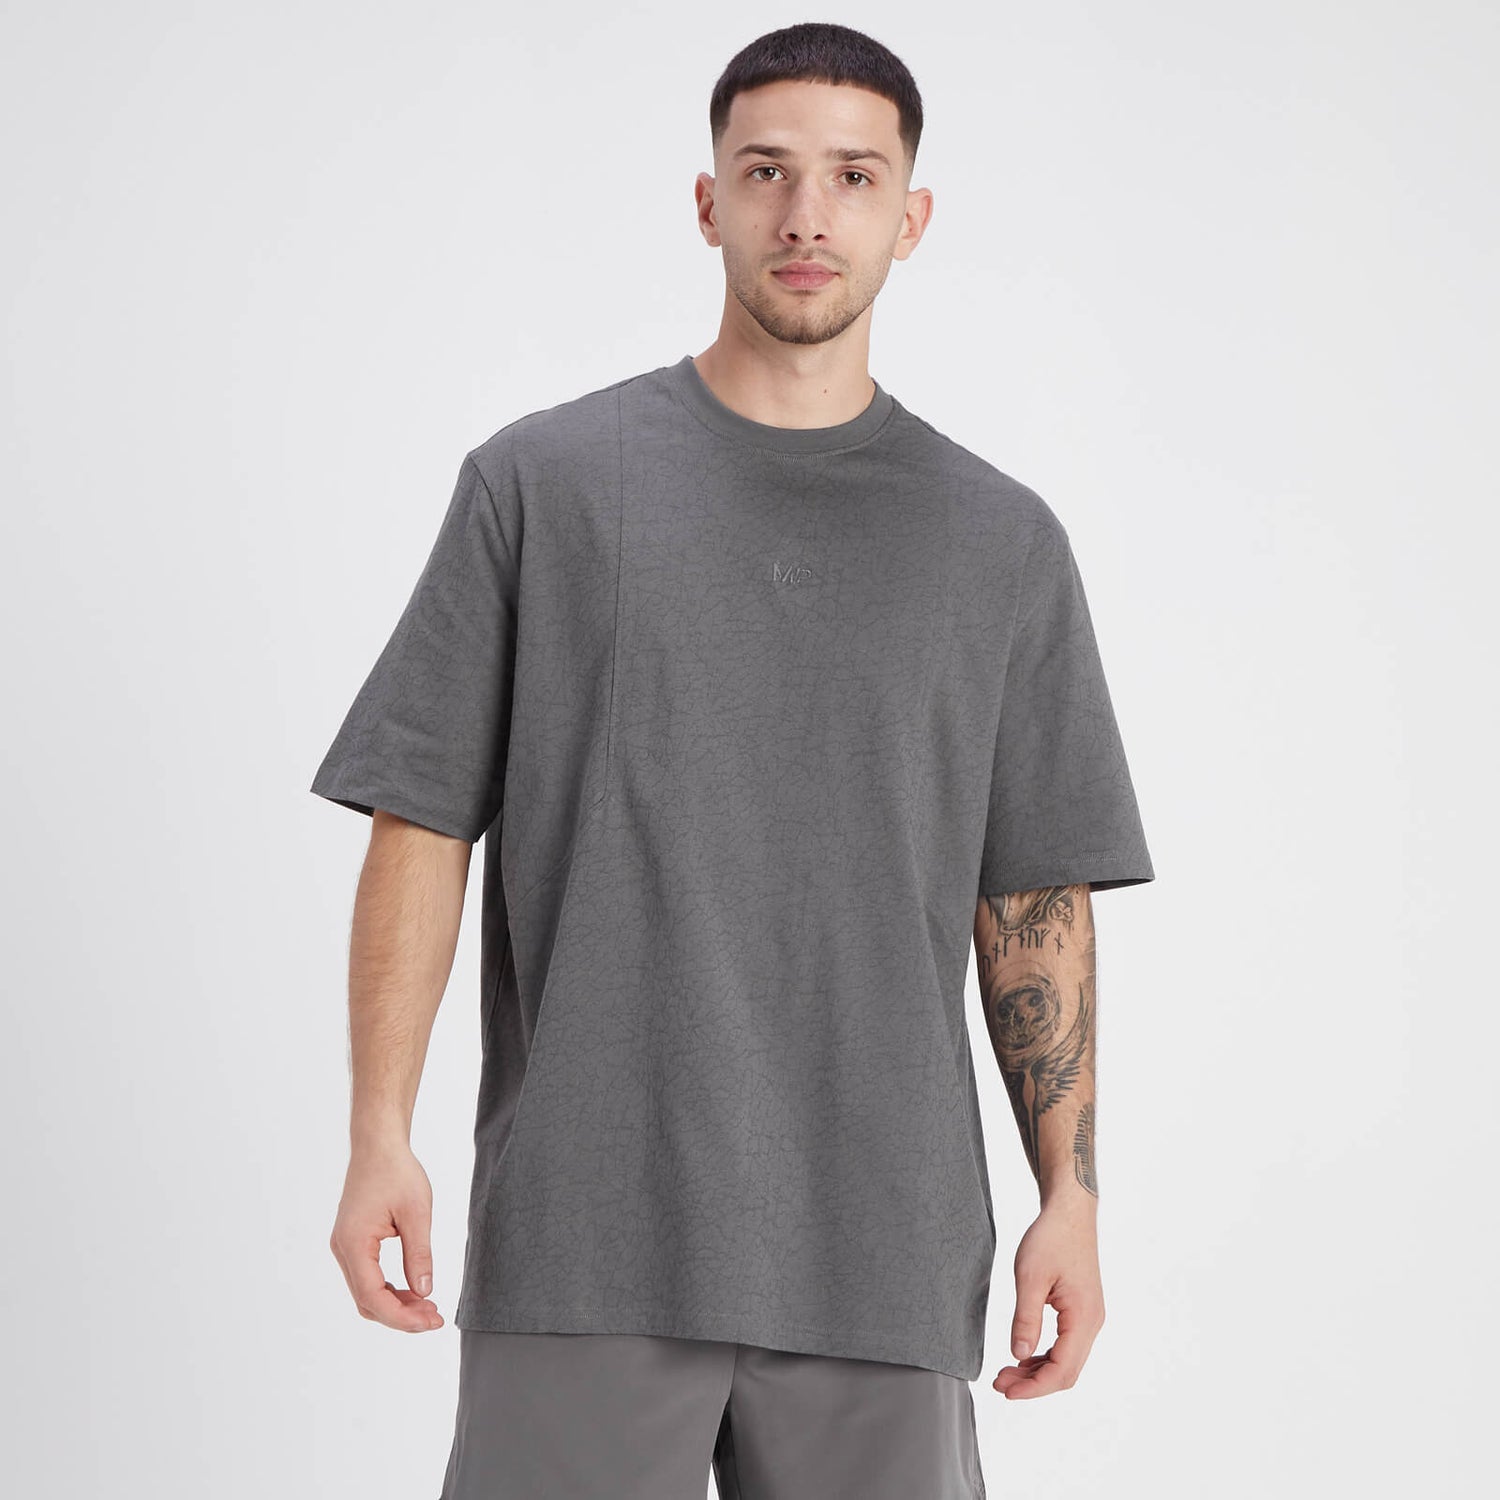 T-shirt Oversize Estampada Adapt da MP para Homem - Cinza